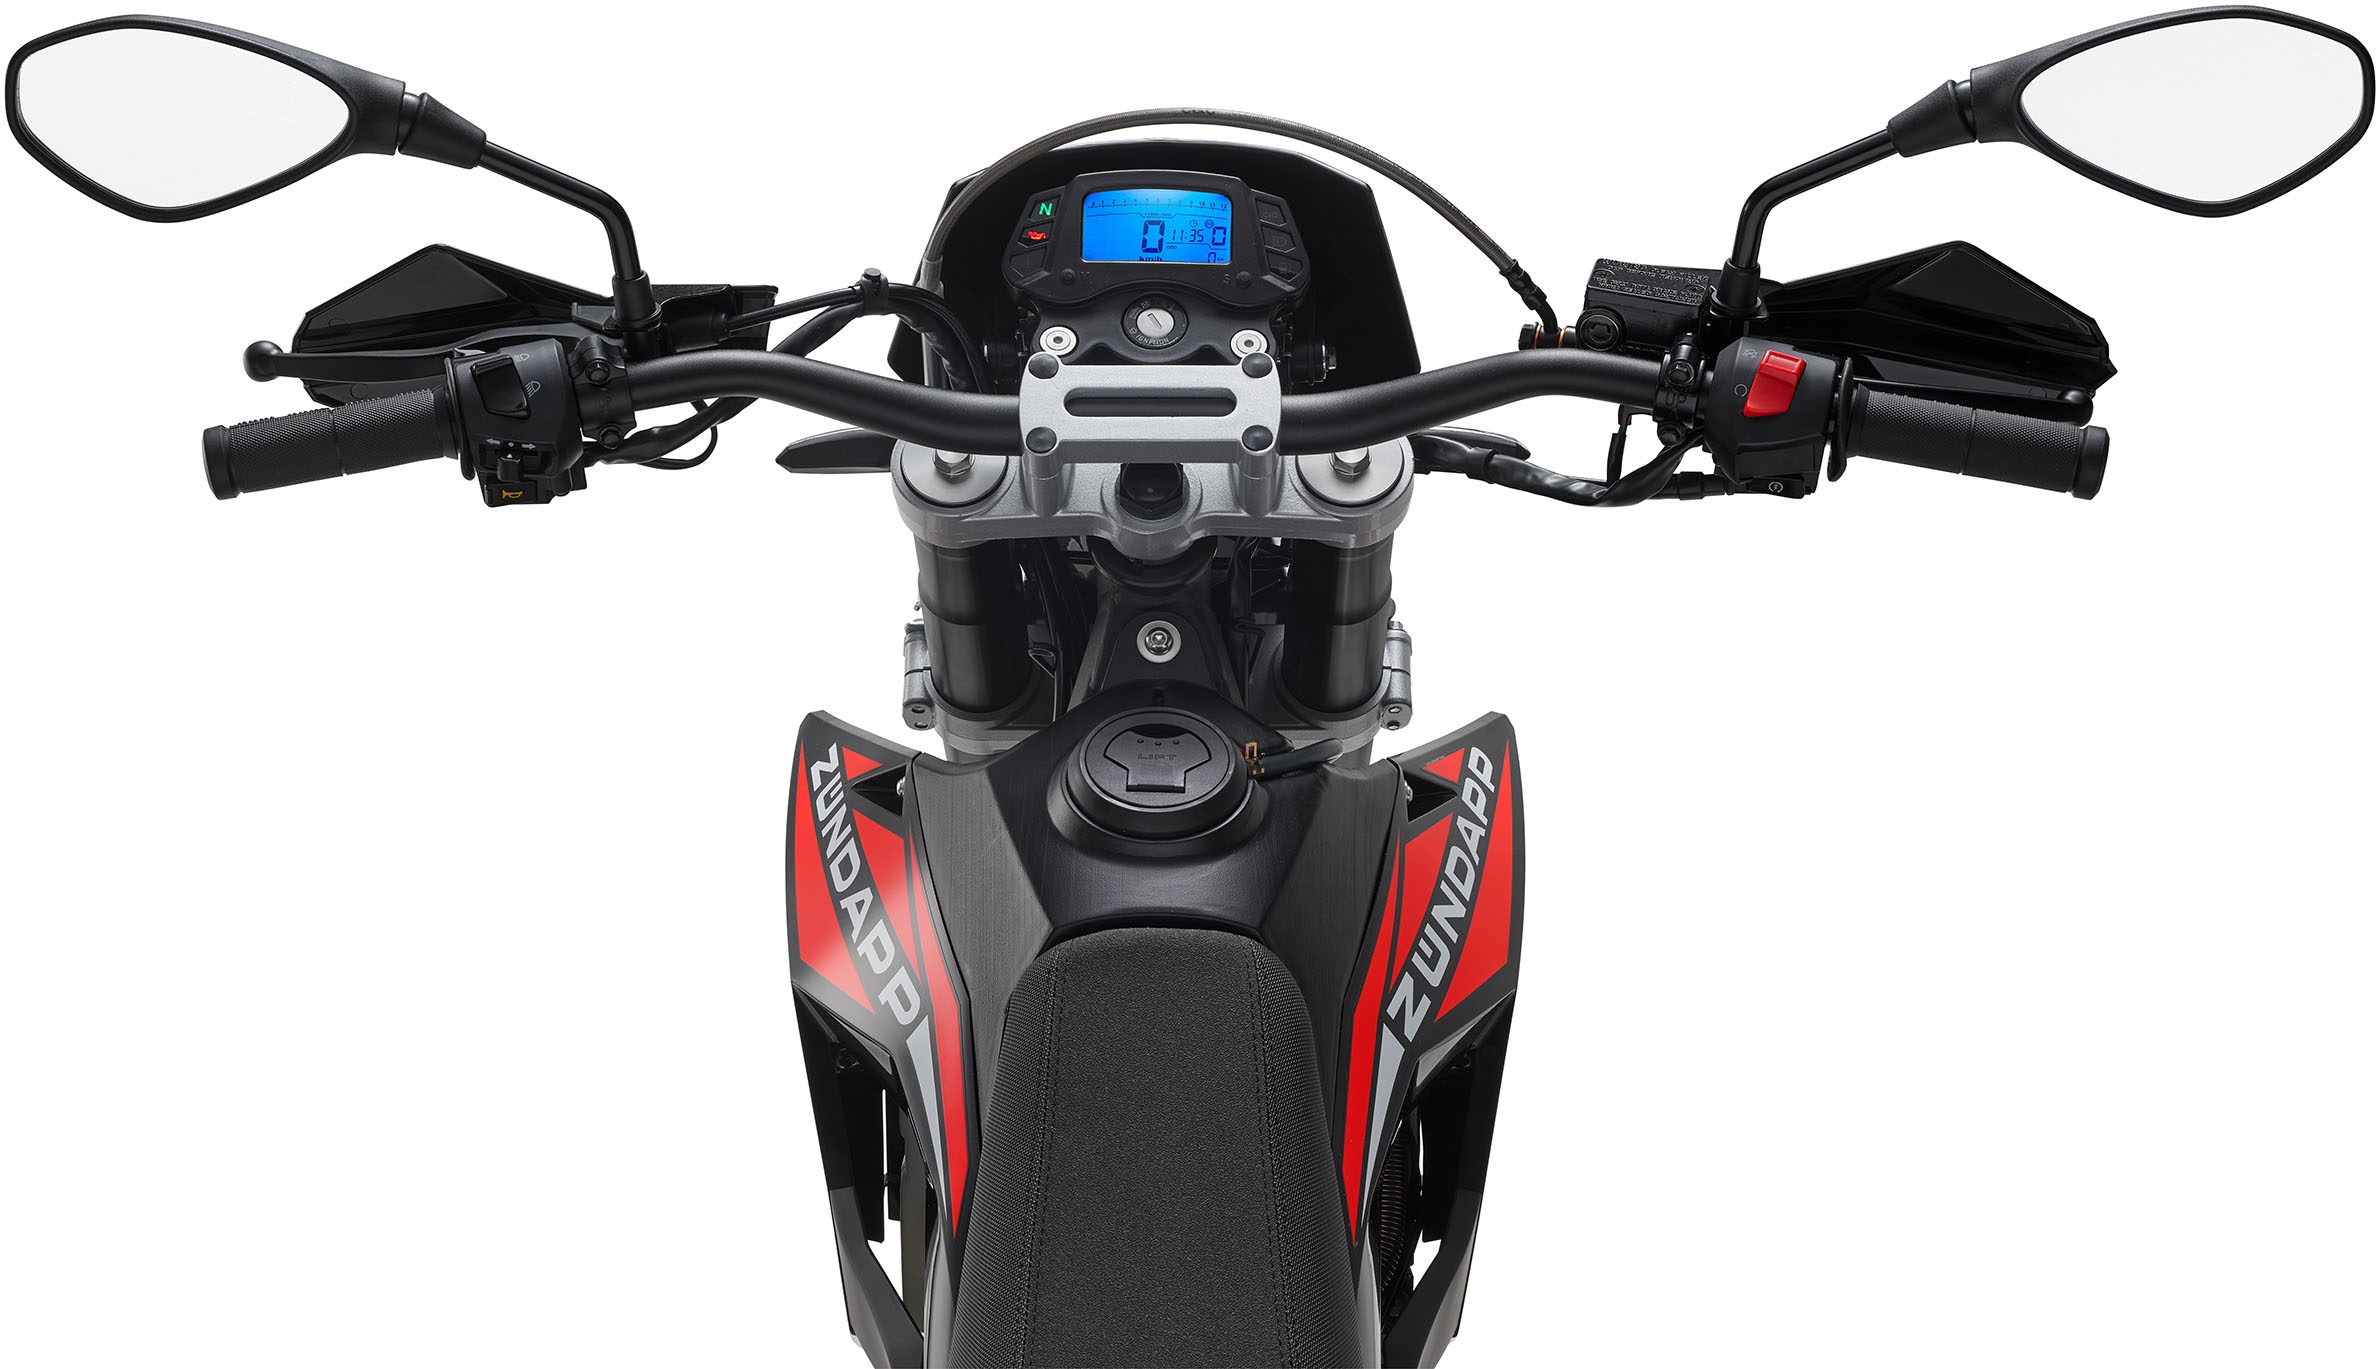 Zündapp Motorrad »ZXE 50 Enduro E5 (45km/h) rot/schwarz«, 50 cm³, 45 km/h, Euro 5, 4,75 PS, Sportliches Design